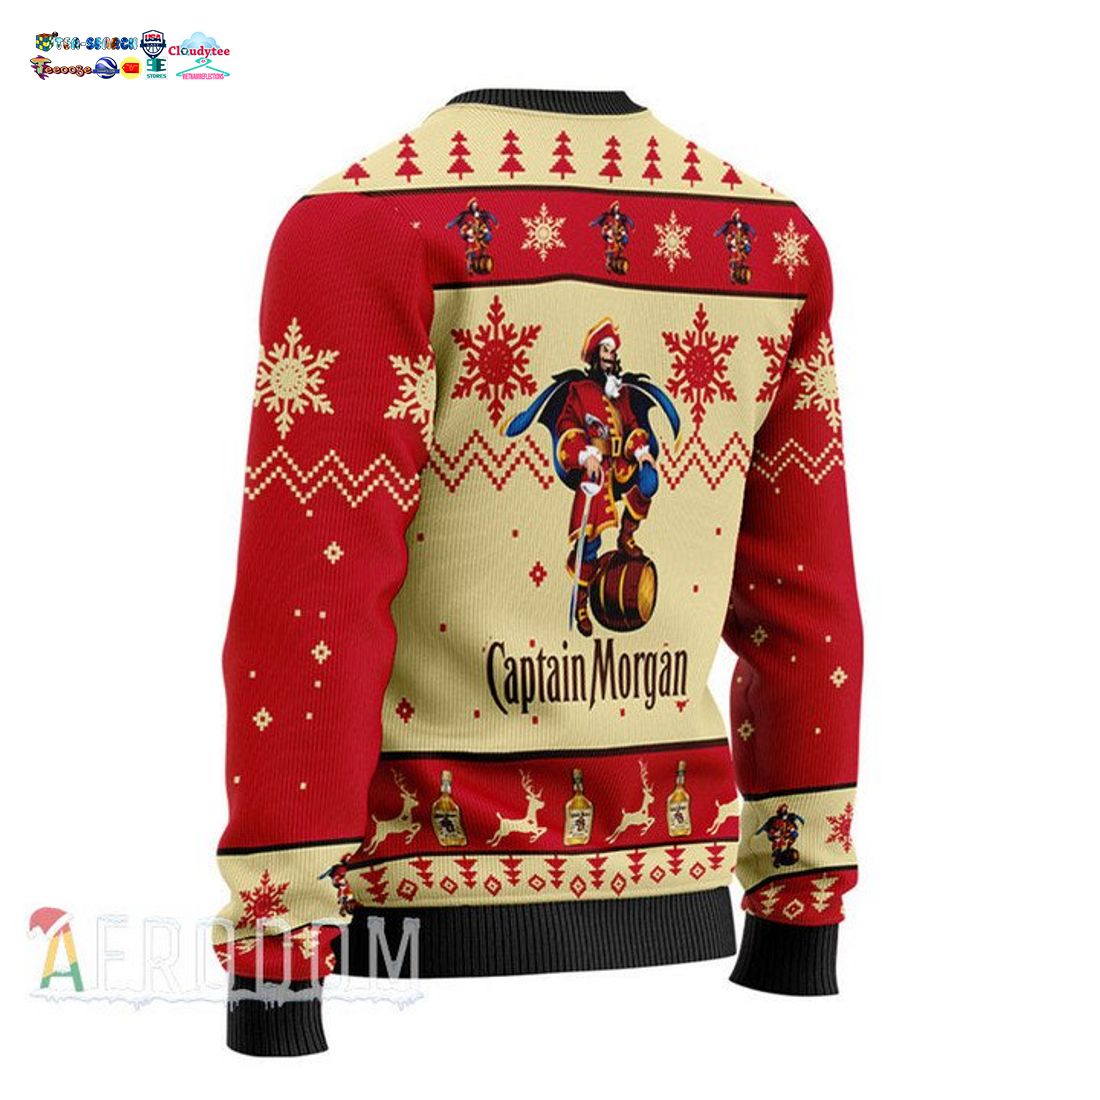 Captain Morgan Rum Ver 2 Ugly Christmas Sweater